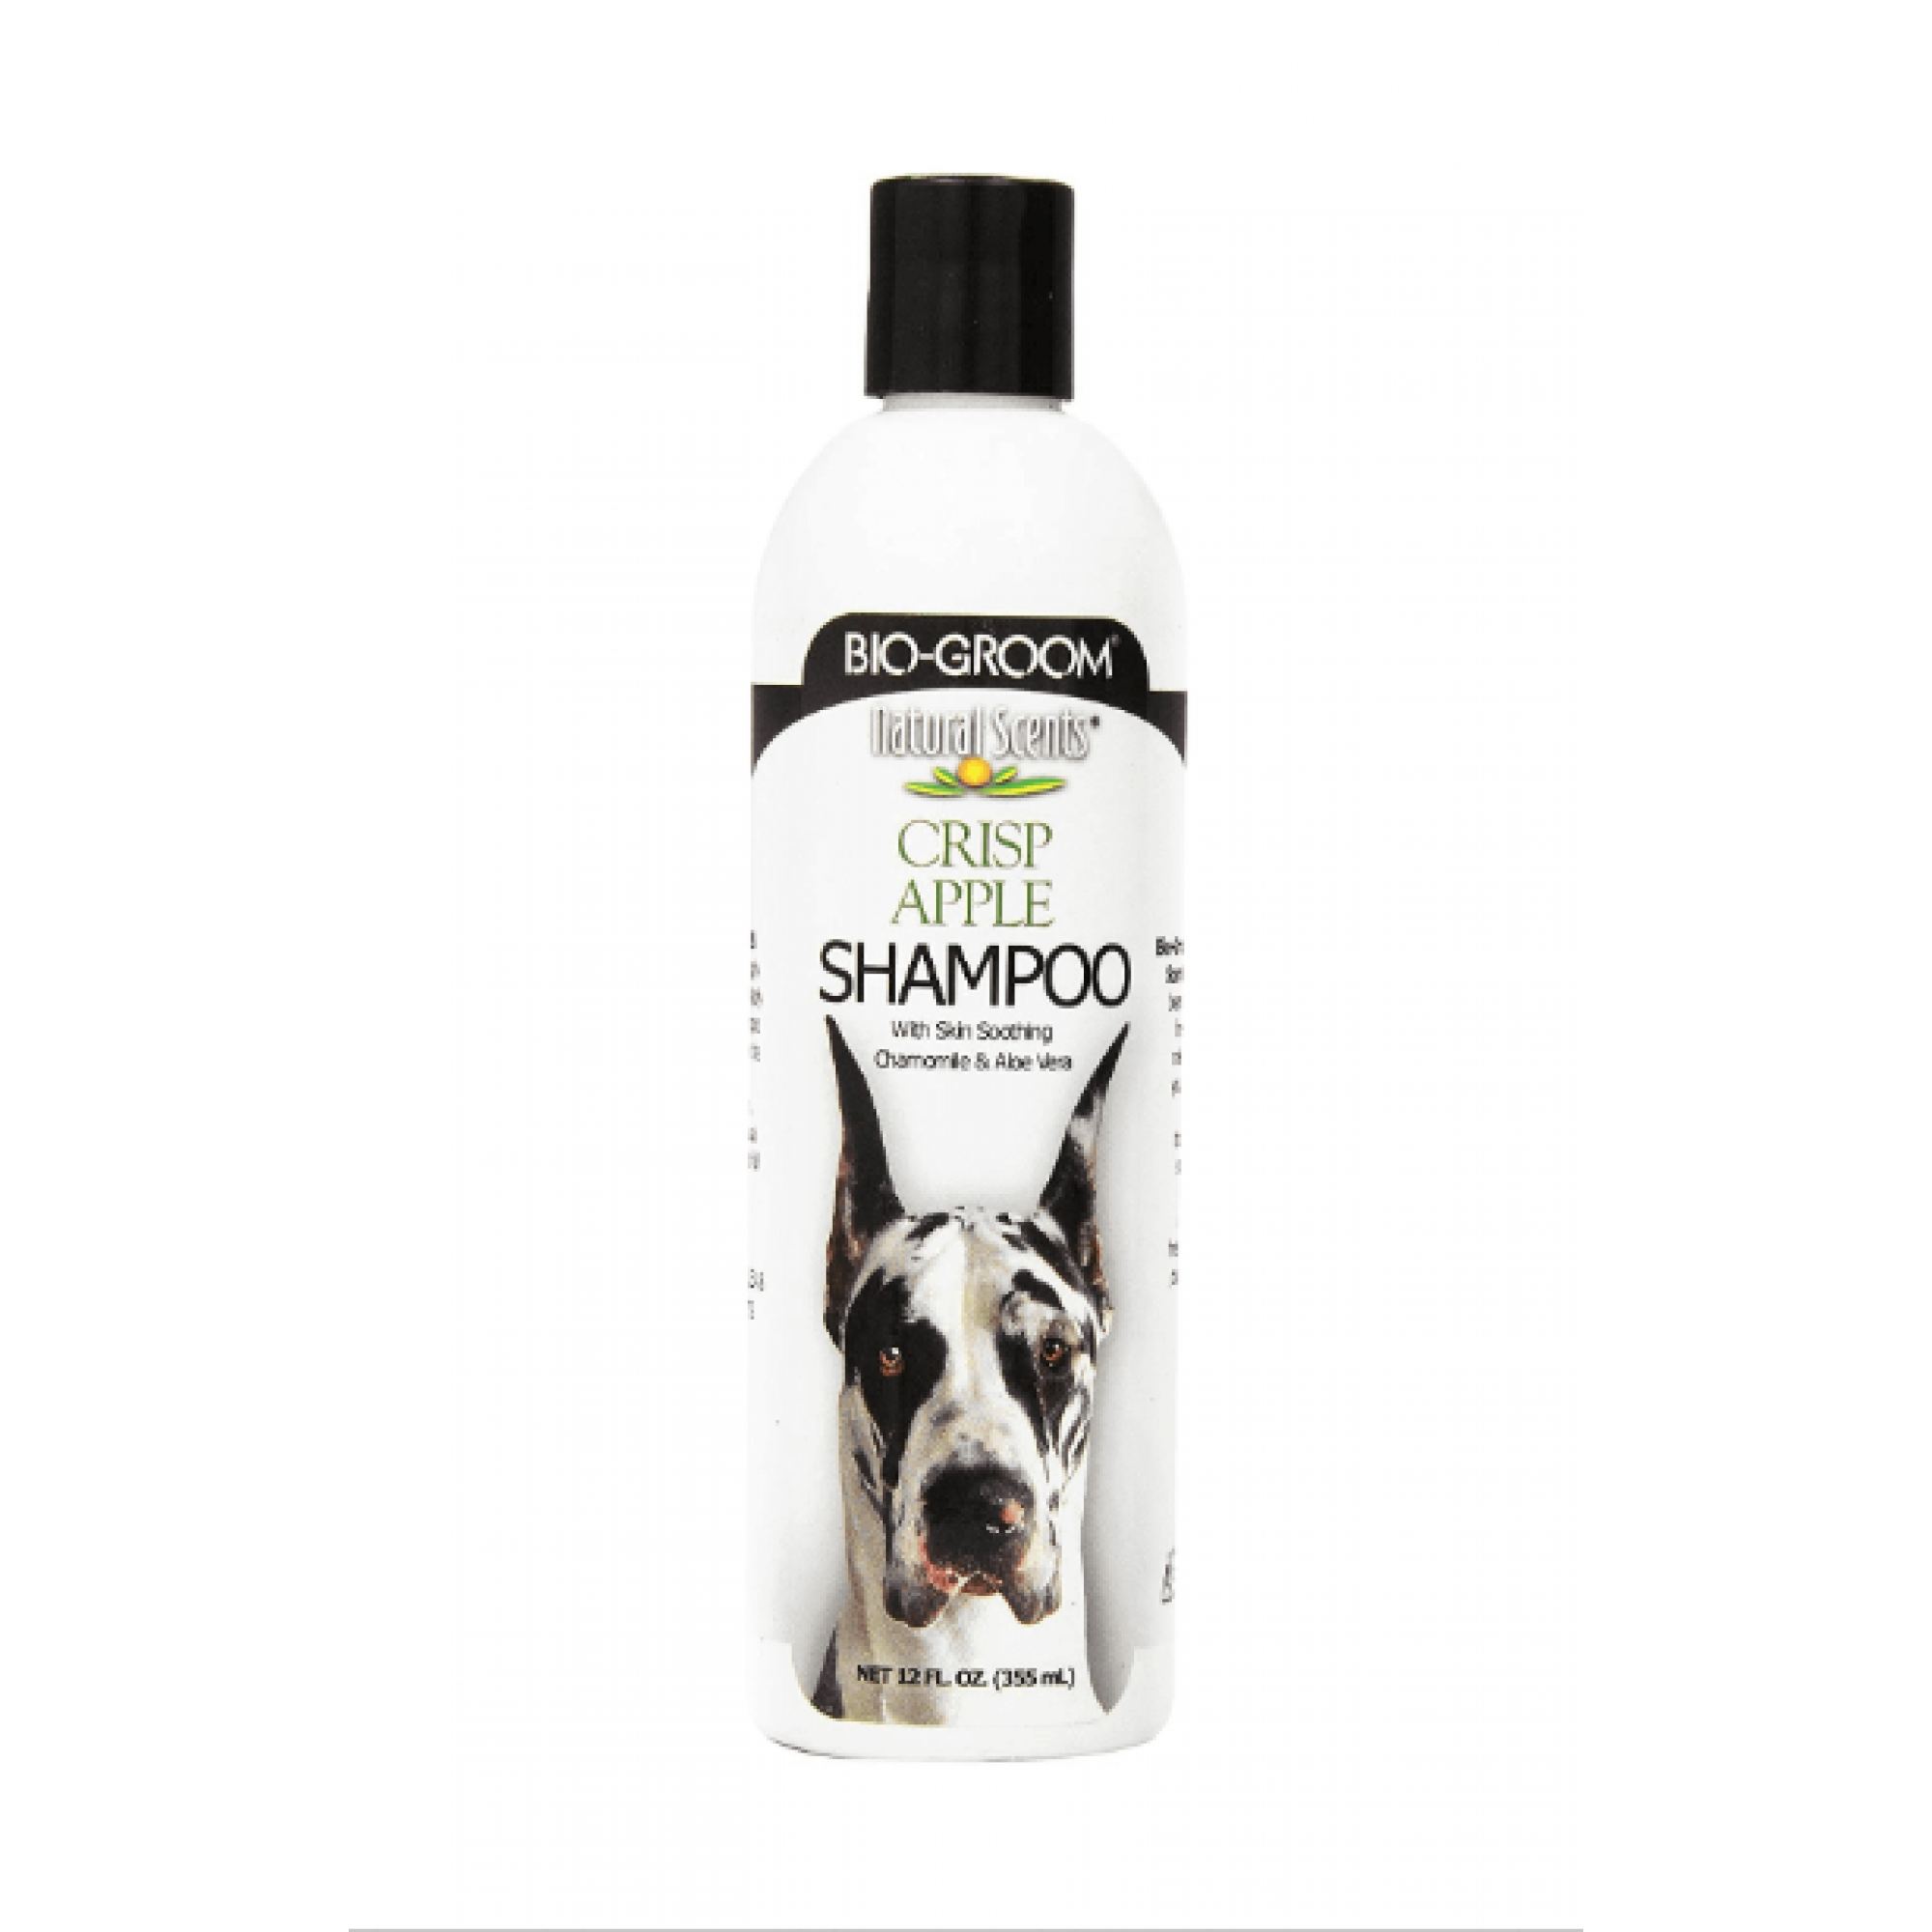 Bio-Groom Skin Soothing Aloe Vera & Chamomile Shampoo - Crisp Apple 12oz (355ml)